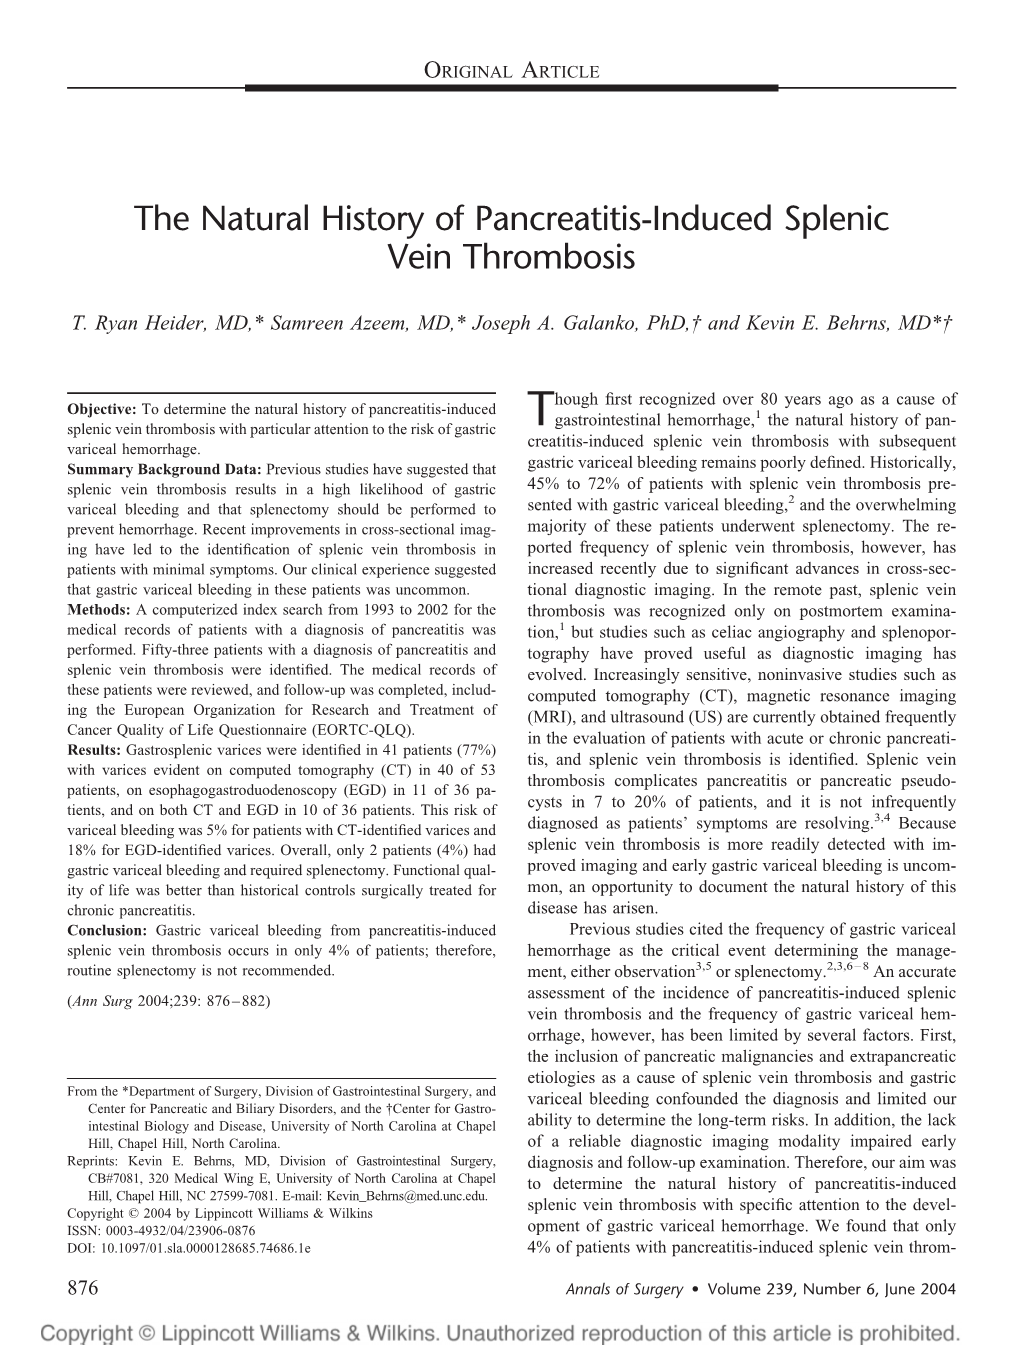 The Natural History of Pancreatitis-Induced Splenic Vein Thrombosis